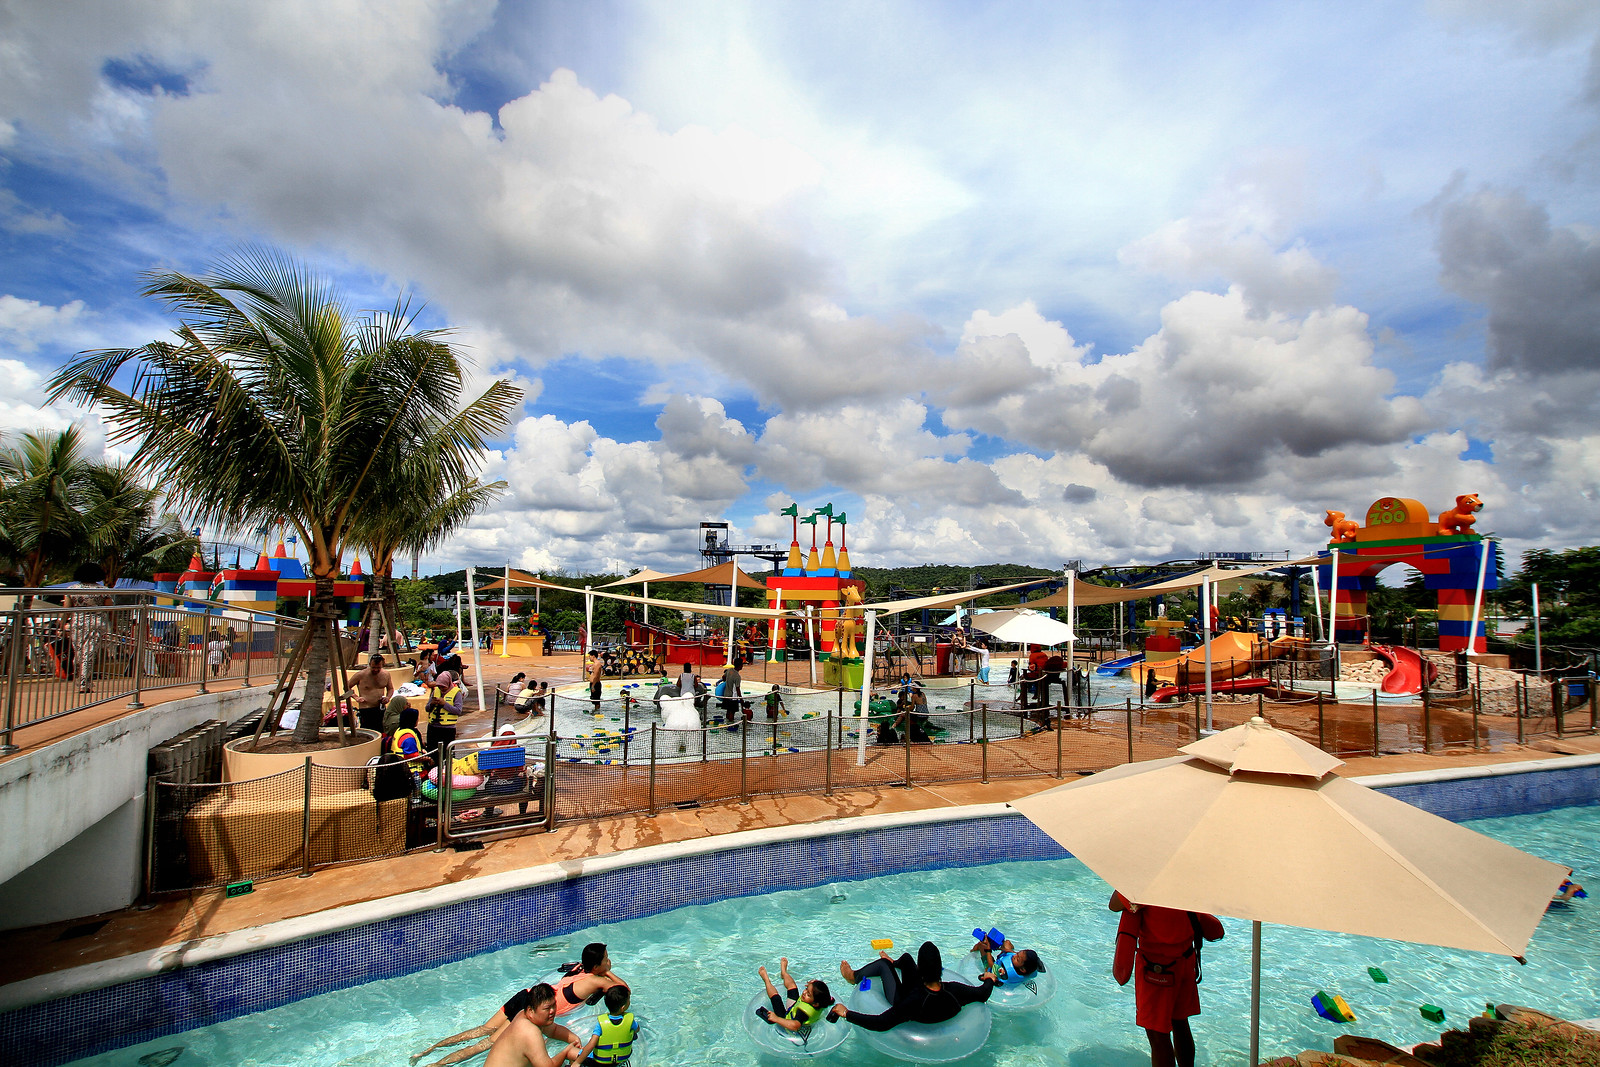 Legoland Malaysia Resort